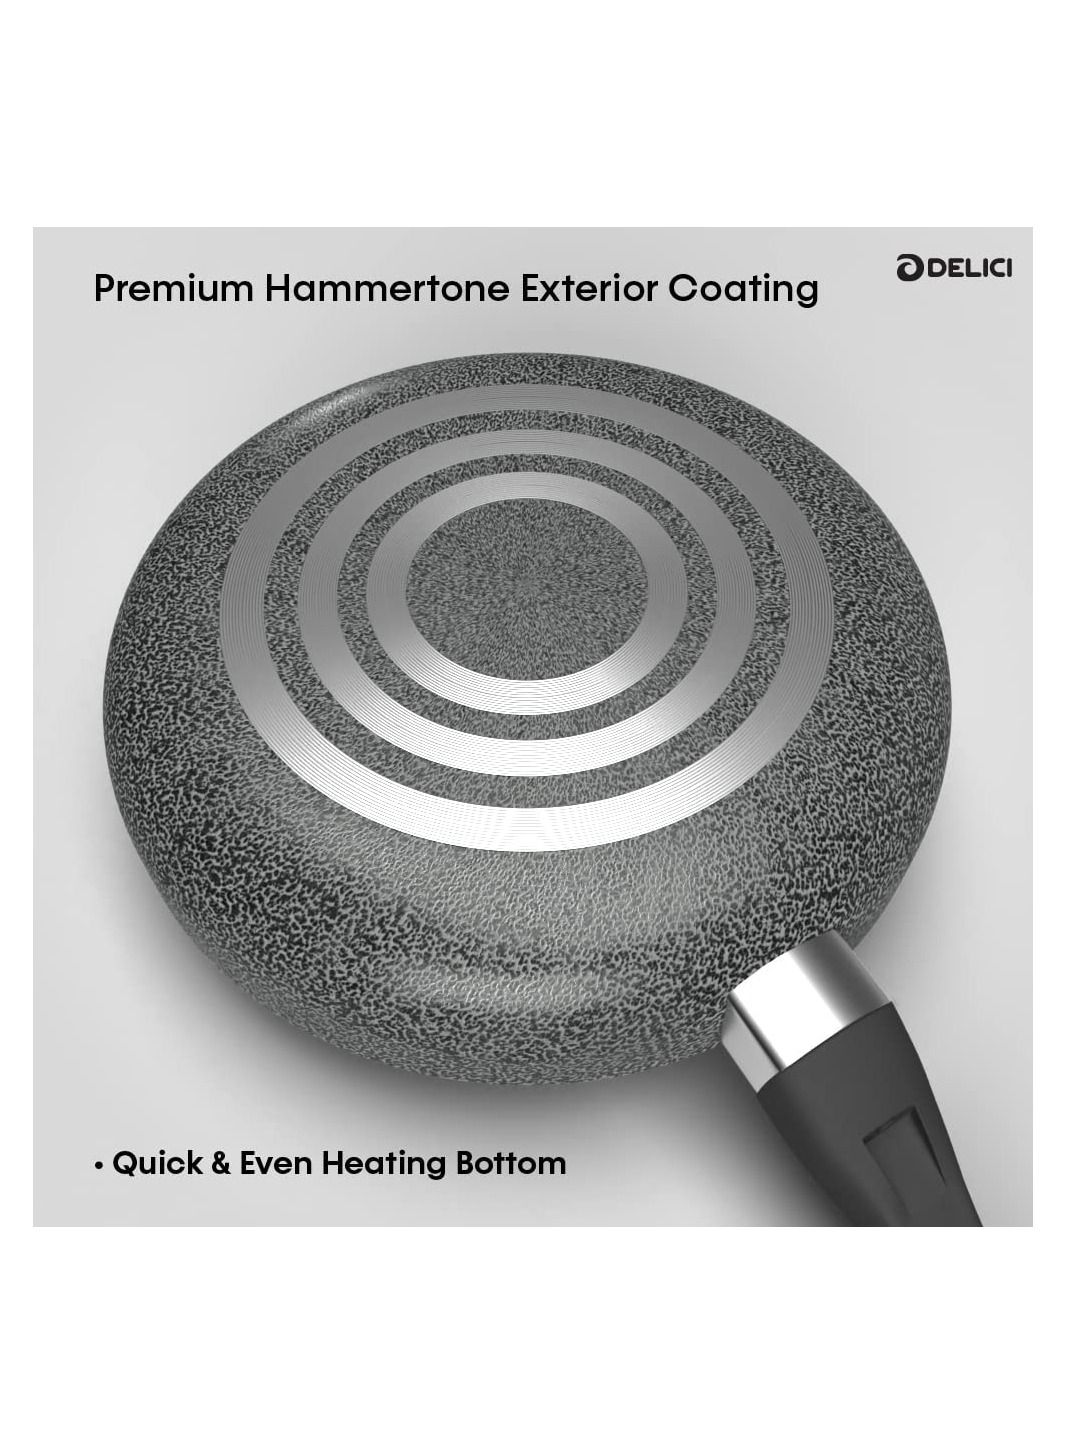 DELICI ACS10HE 10Pcs Nonstick Granite Cookware Set with 5 layer Super Coating, Medium 